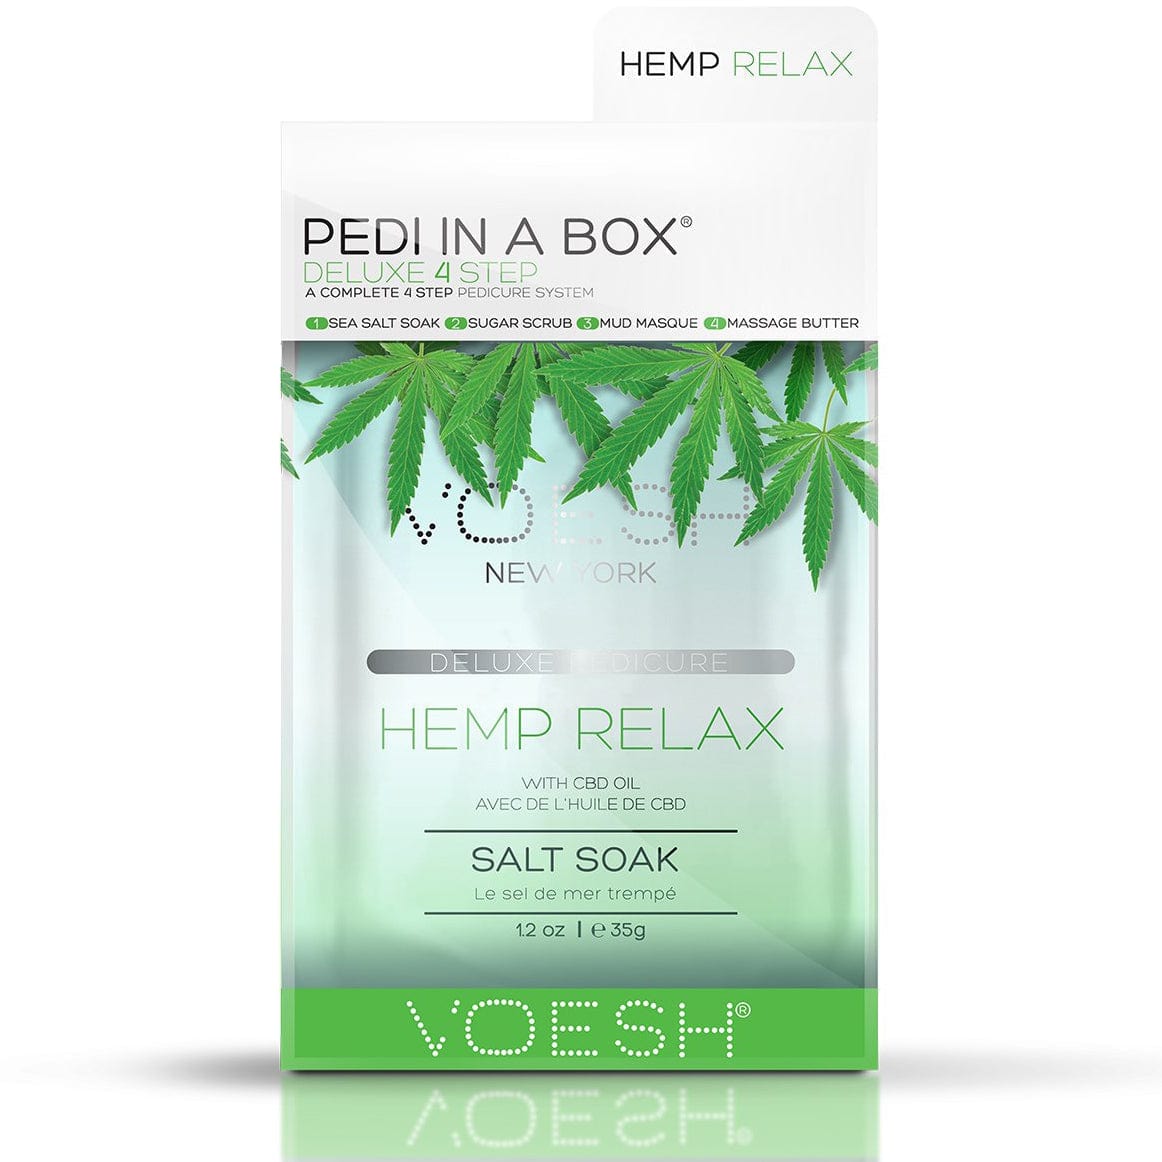 VOESH Pedi In A Box Deluxe 4 Step Hemp Relax